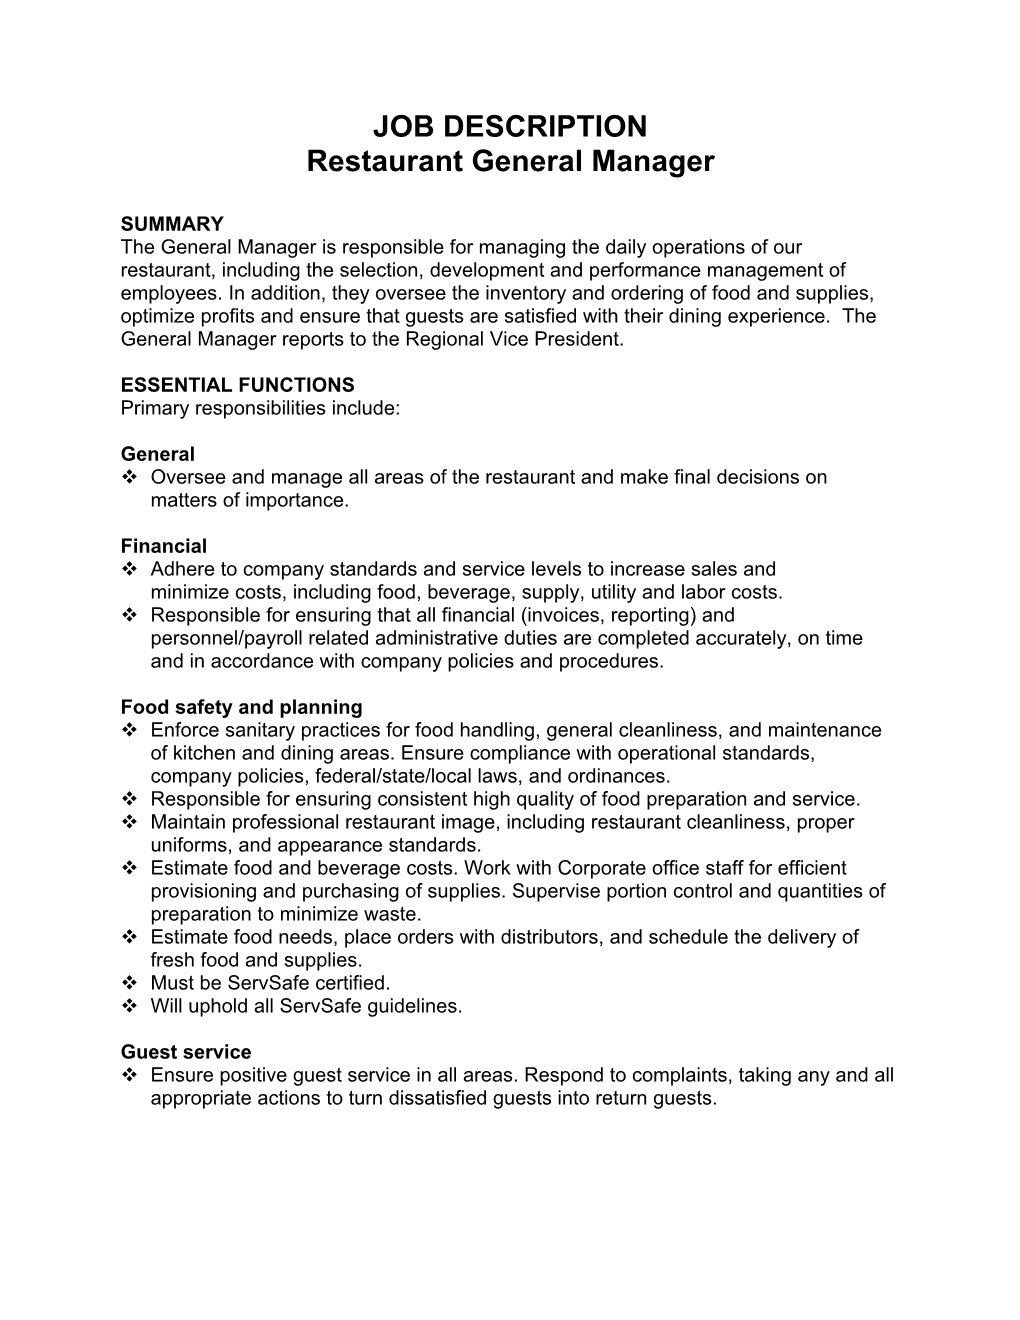 JOB DESCRIPTION Restaurant General Manager